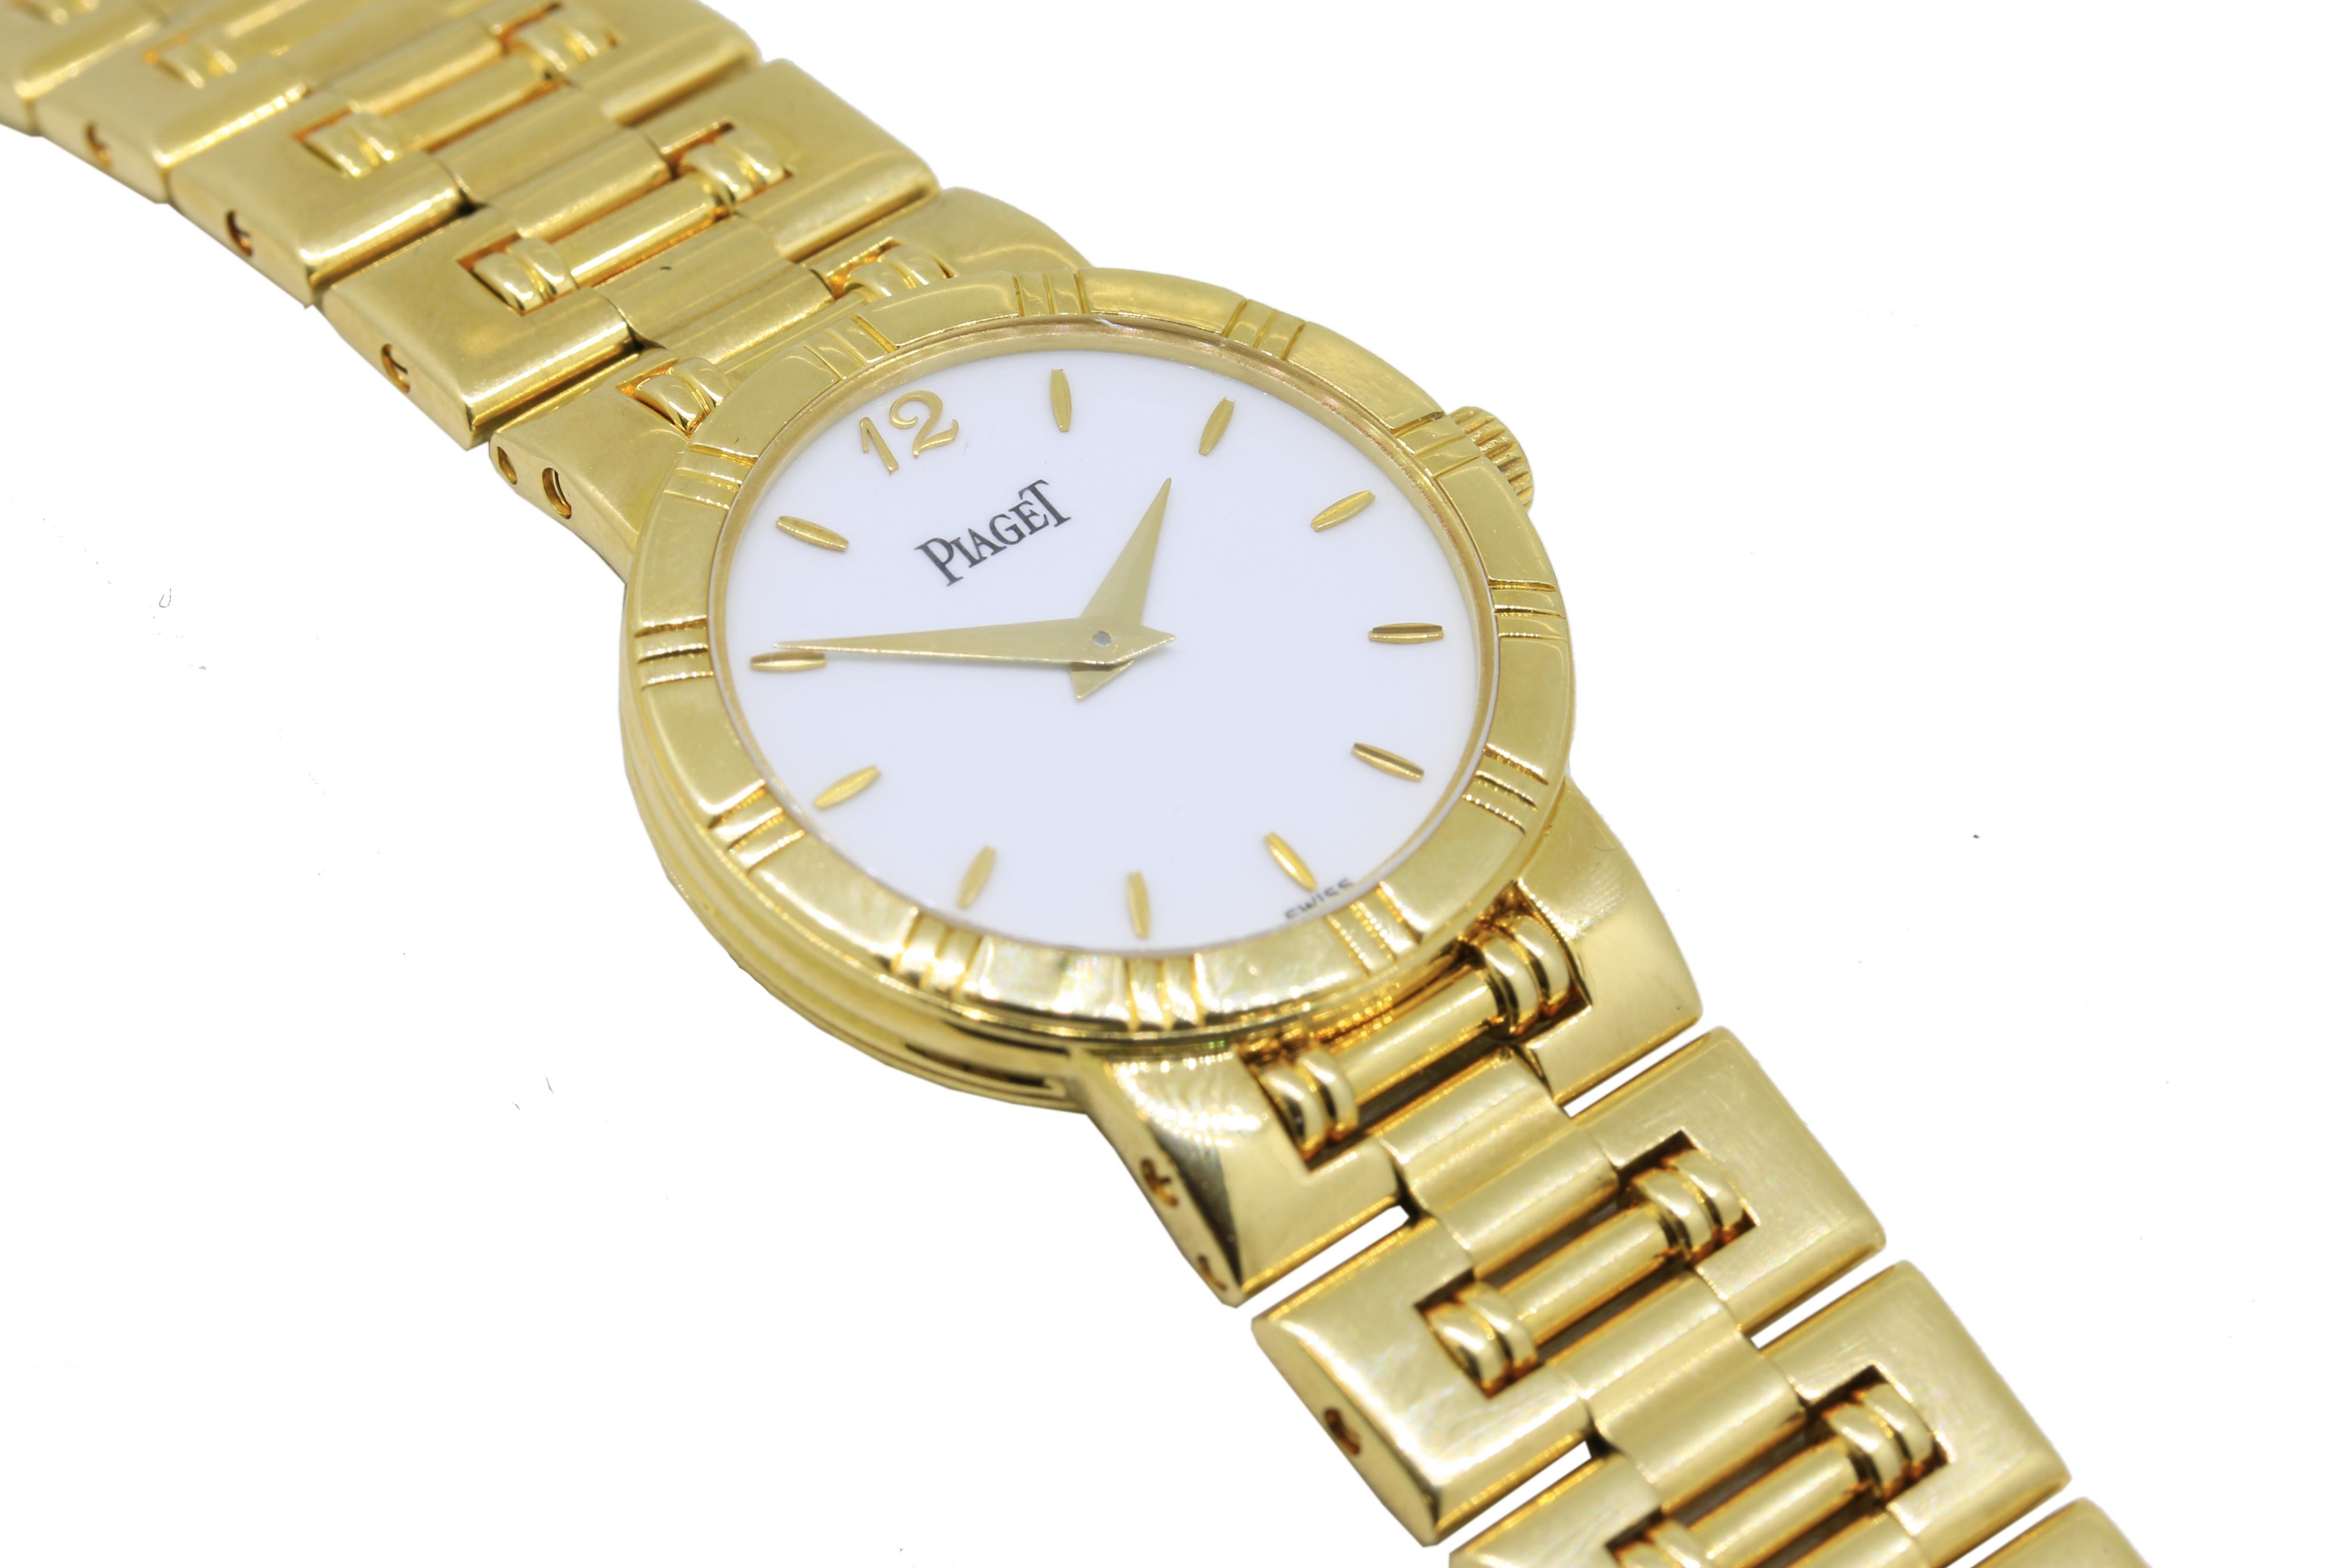 Piaget Dancer 18kt Gold Wrist Watch Circa 1990's
Featuring the famous dancer bracelet band 
White enamel dial 
Quartz Movement 
Fully serviced 2018
Excellent Condition
Cal 857P
Case Number: 80563  K81
Model Number: 558445